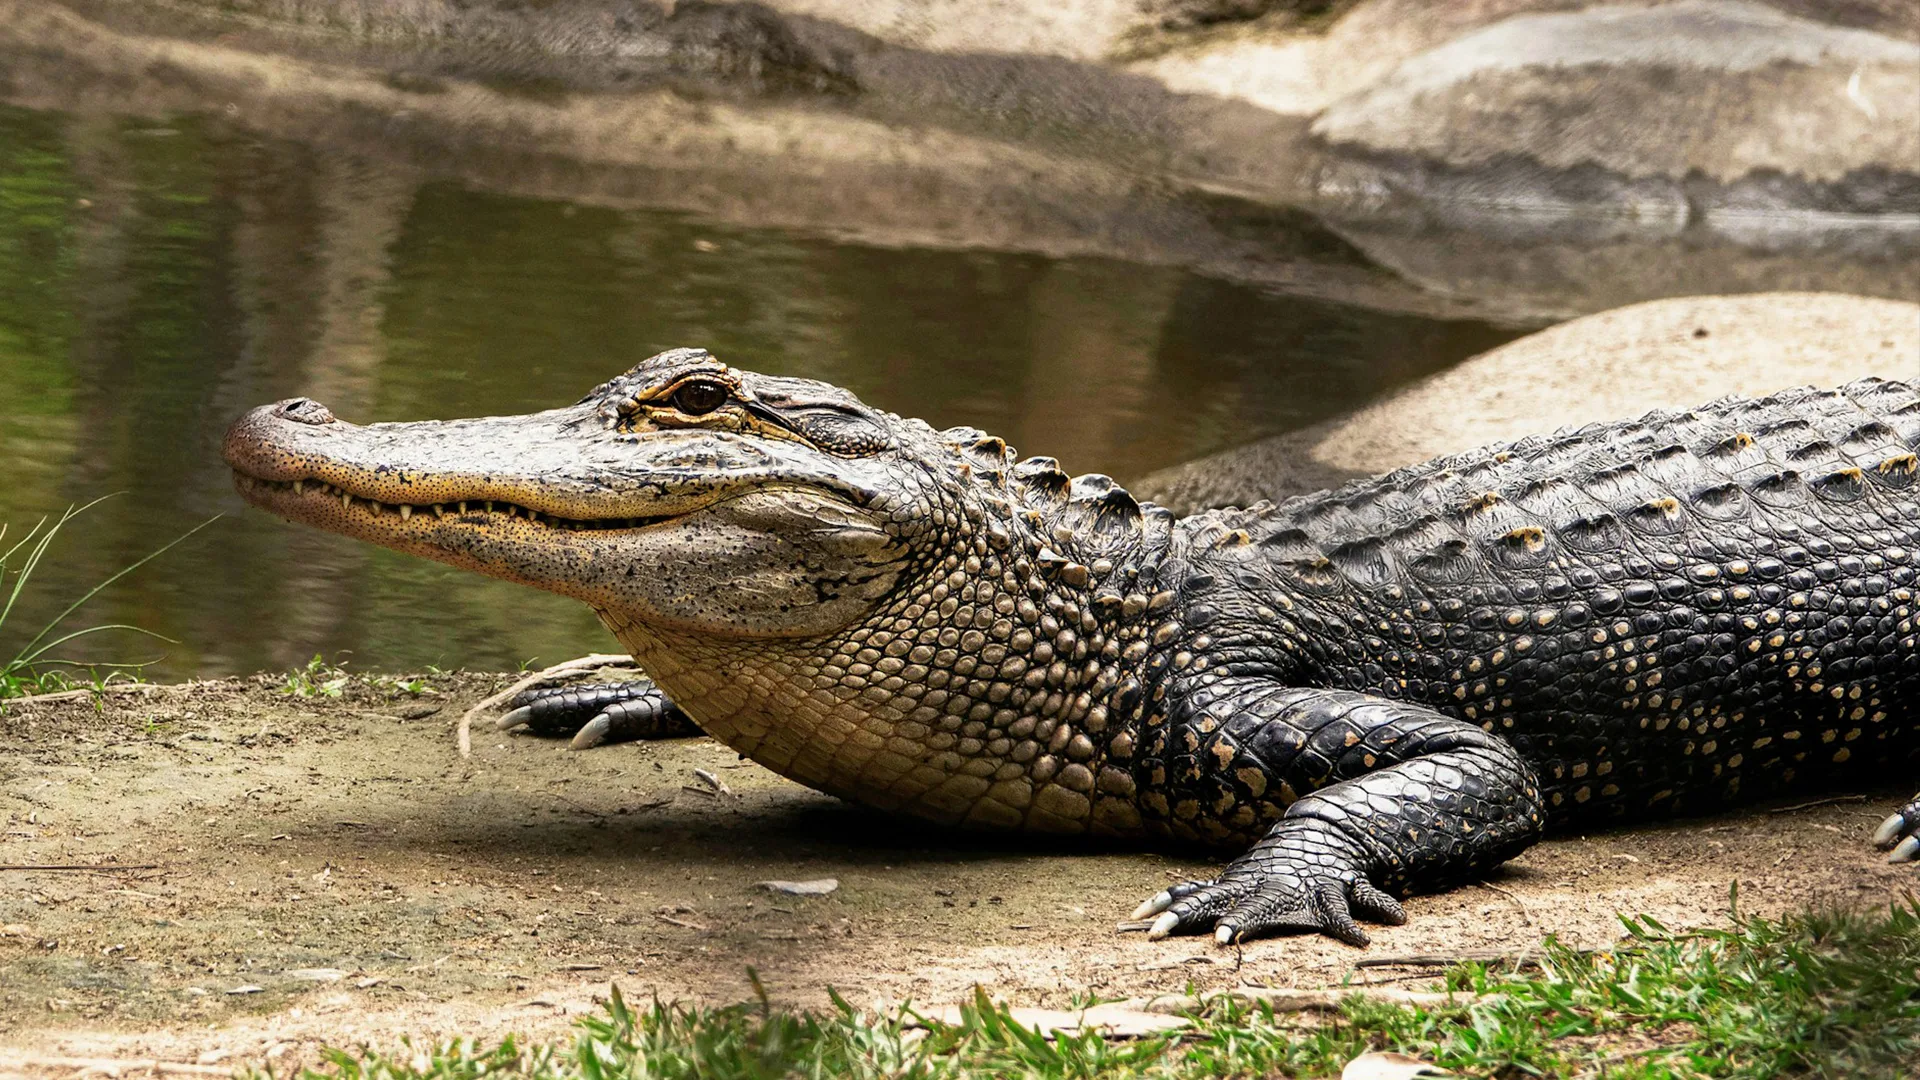 Crocodile on land next to river